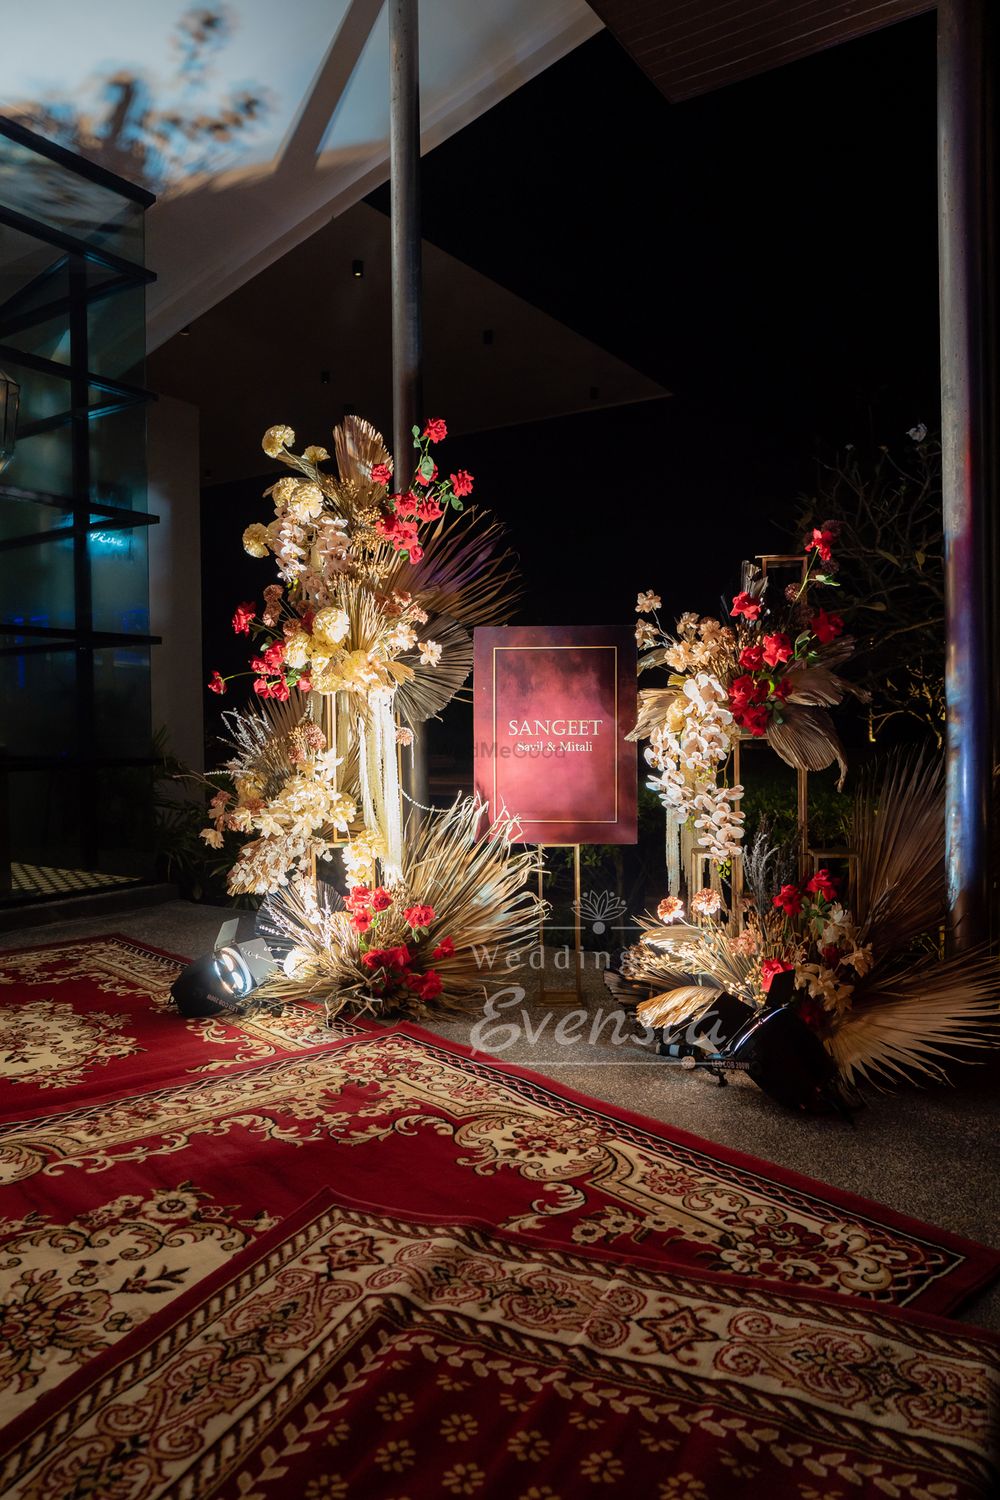 Photo From Maitali X Savil Sangeet Night, Thailand, Phuket (Khao Lak) - By Weddings By Evensia